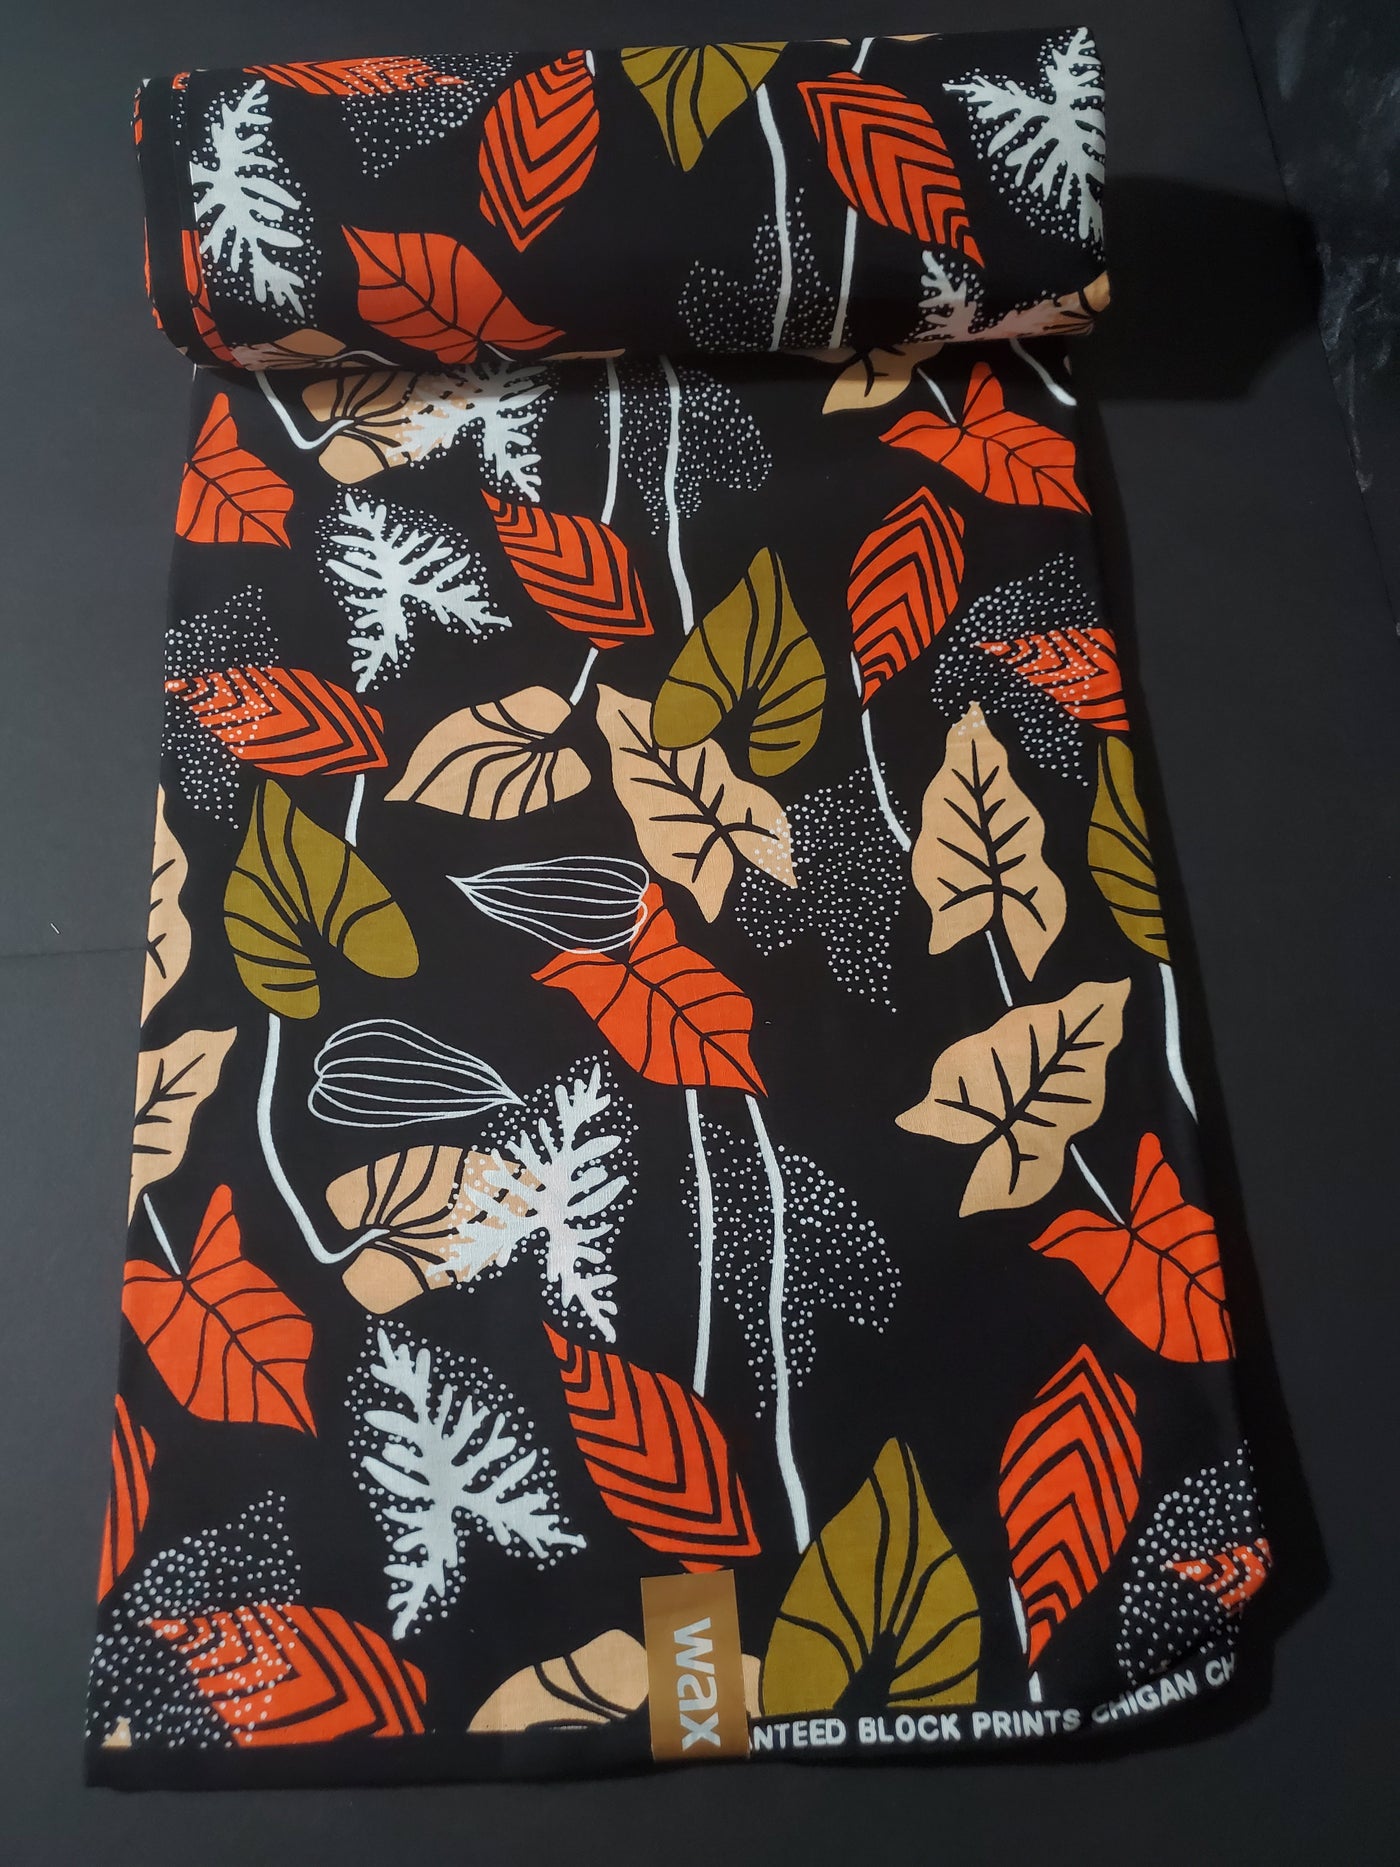 Black and Orange African Ankara Fabric